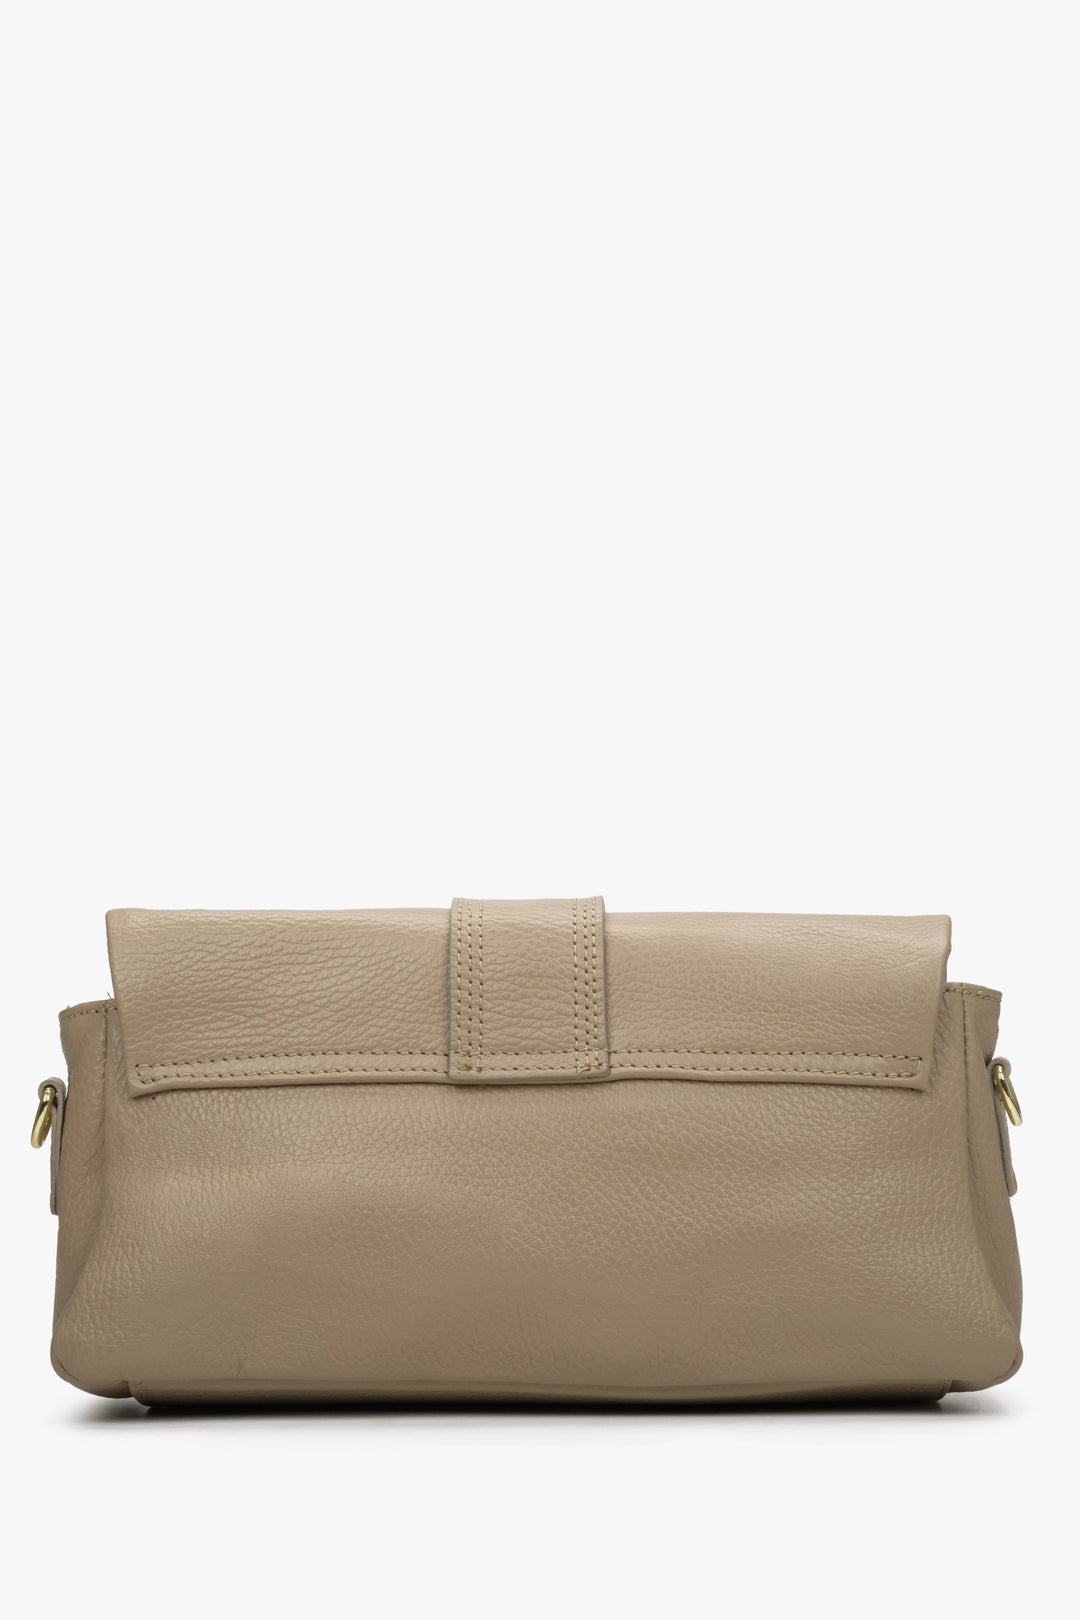 Women's beige leather handbag Estro - reverse.